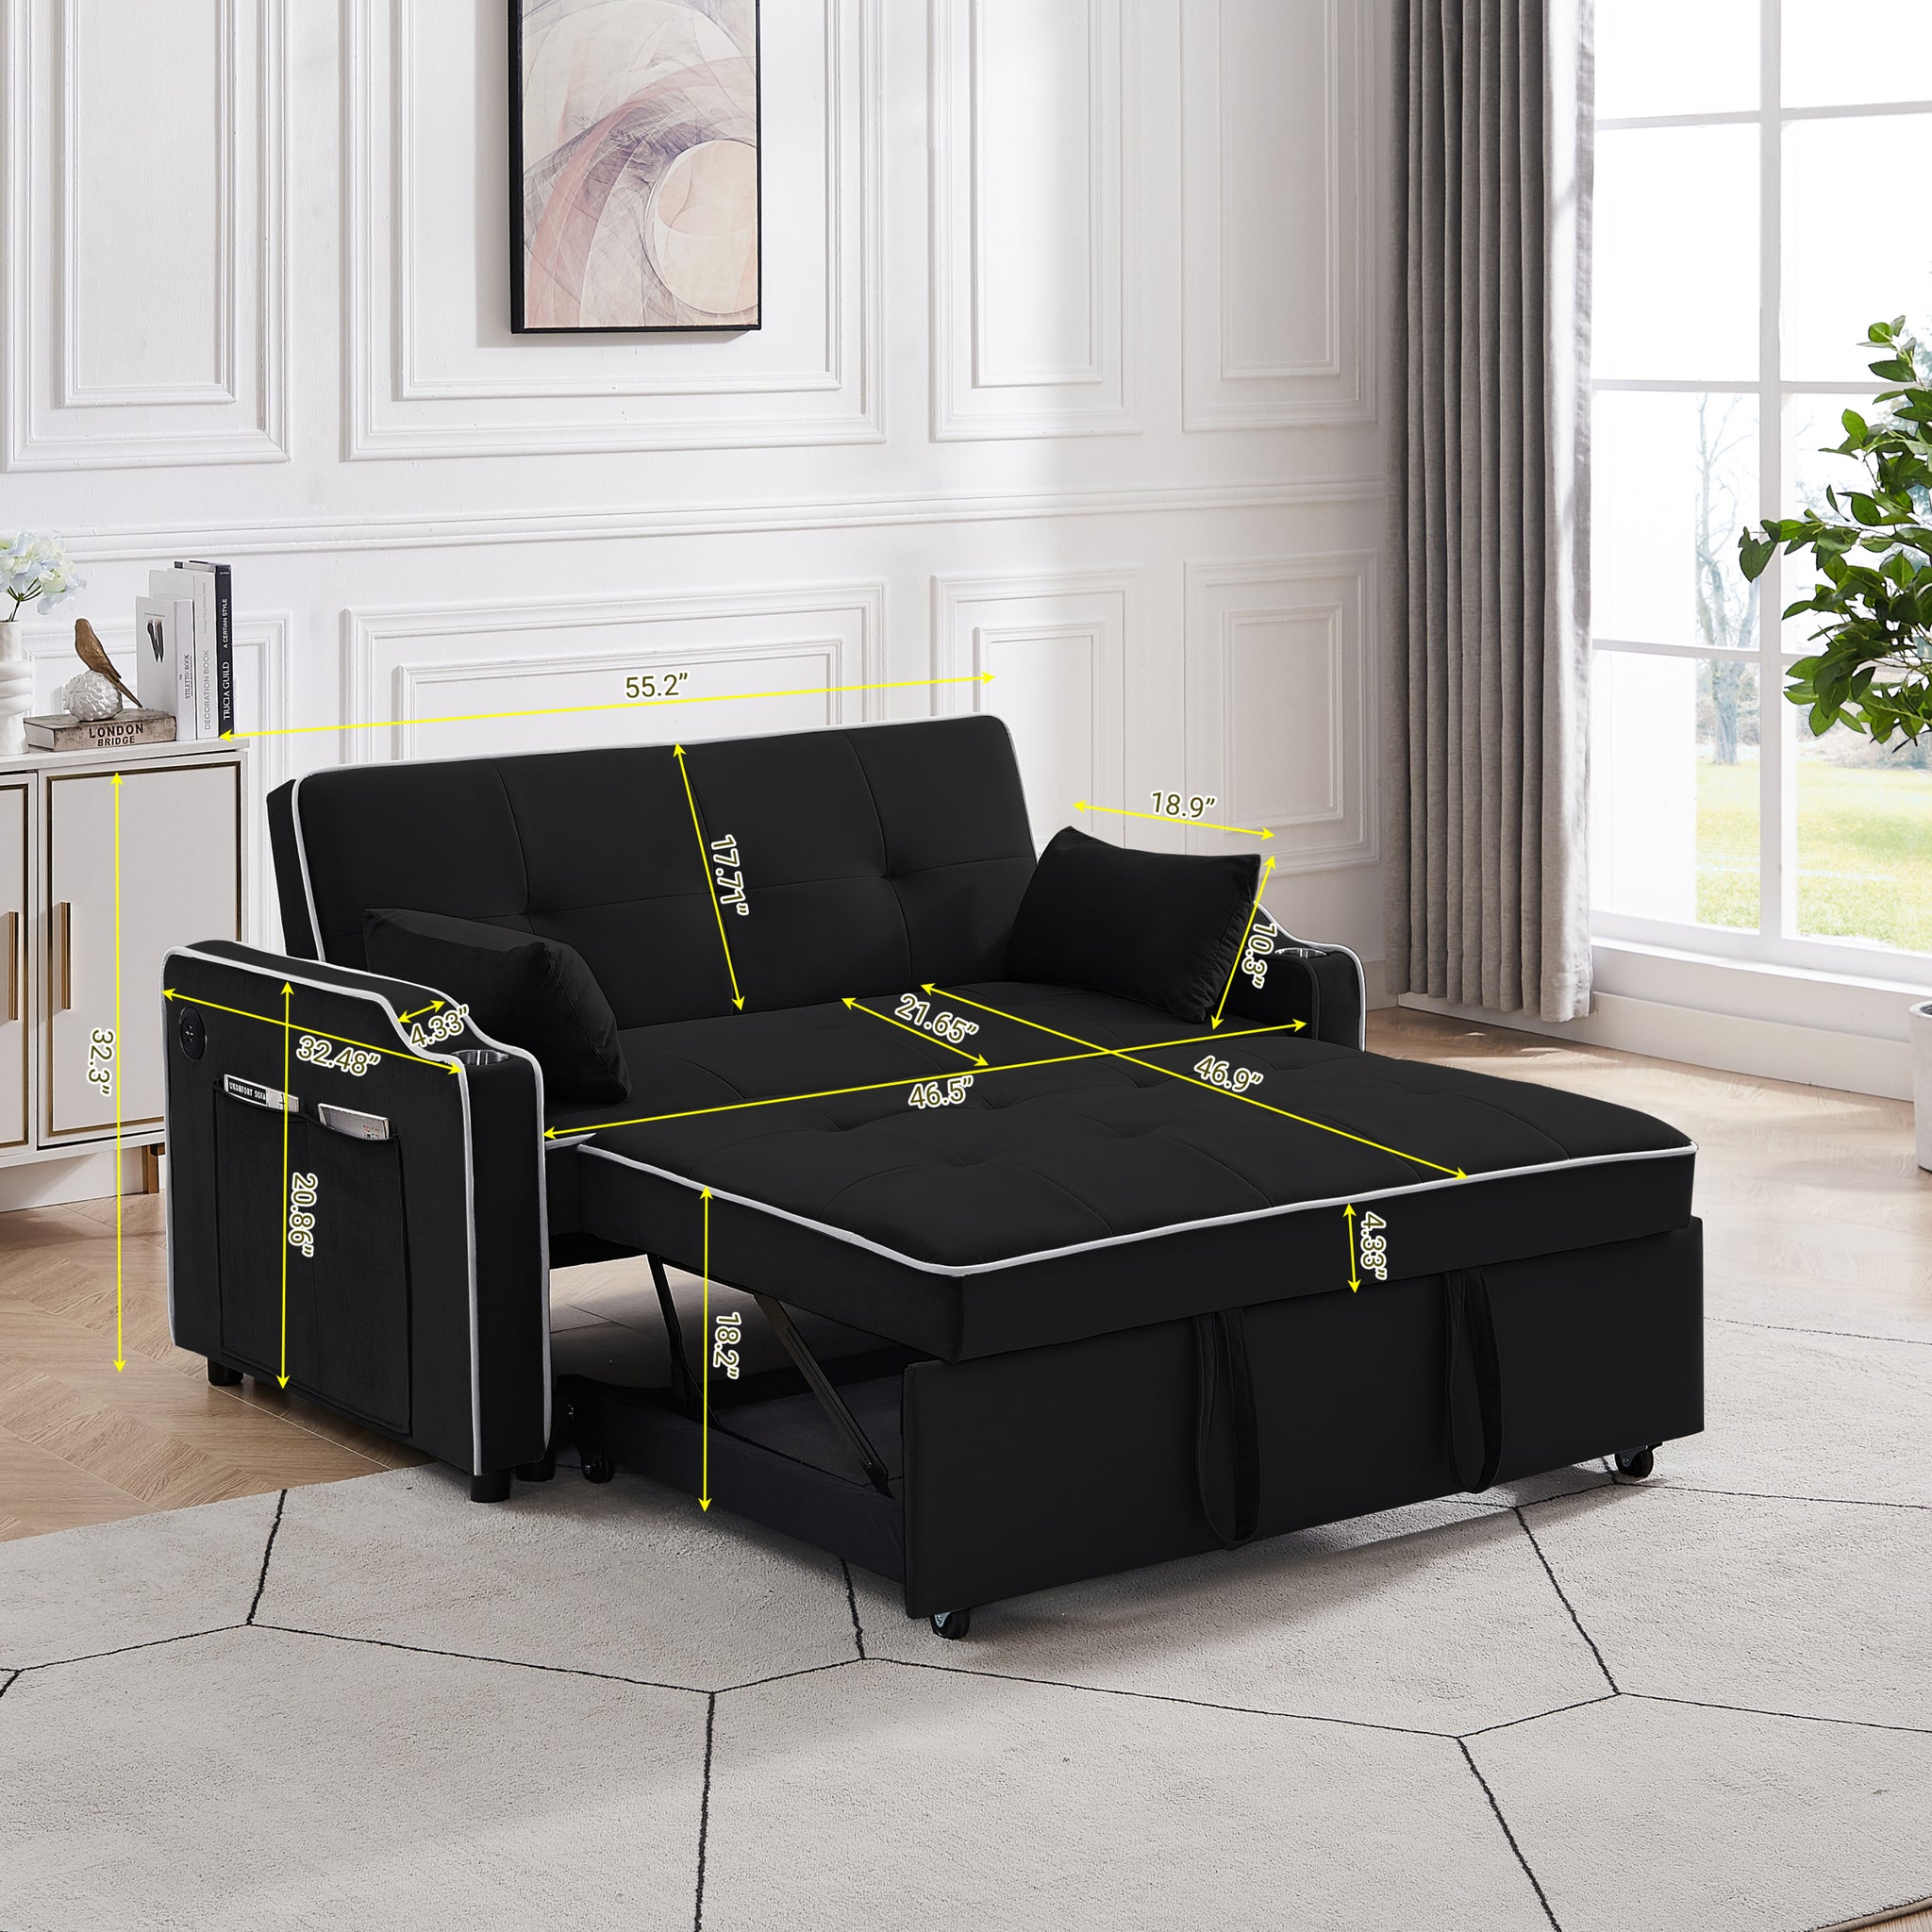 Sofa Bed, 3 in 1 Convertible Sofa Chair Bed black-velvet